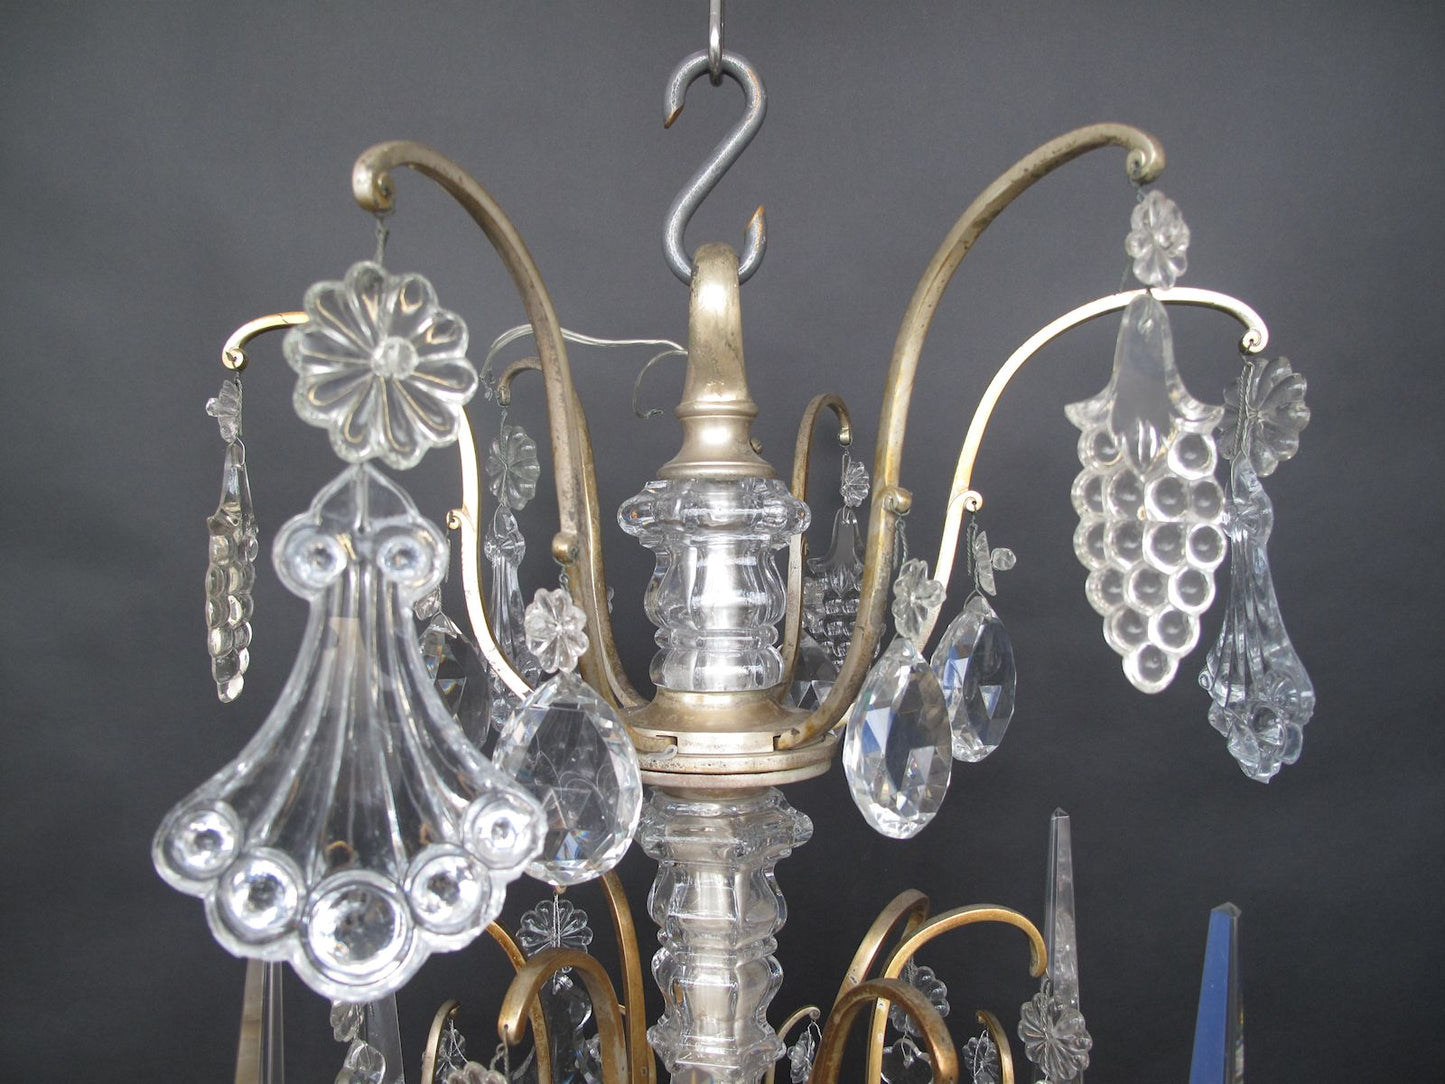 view of top part of chandelier